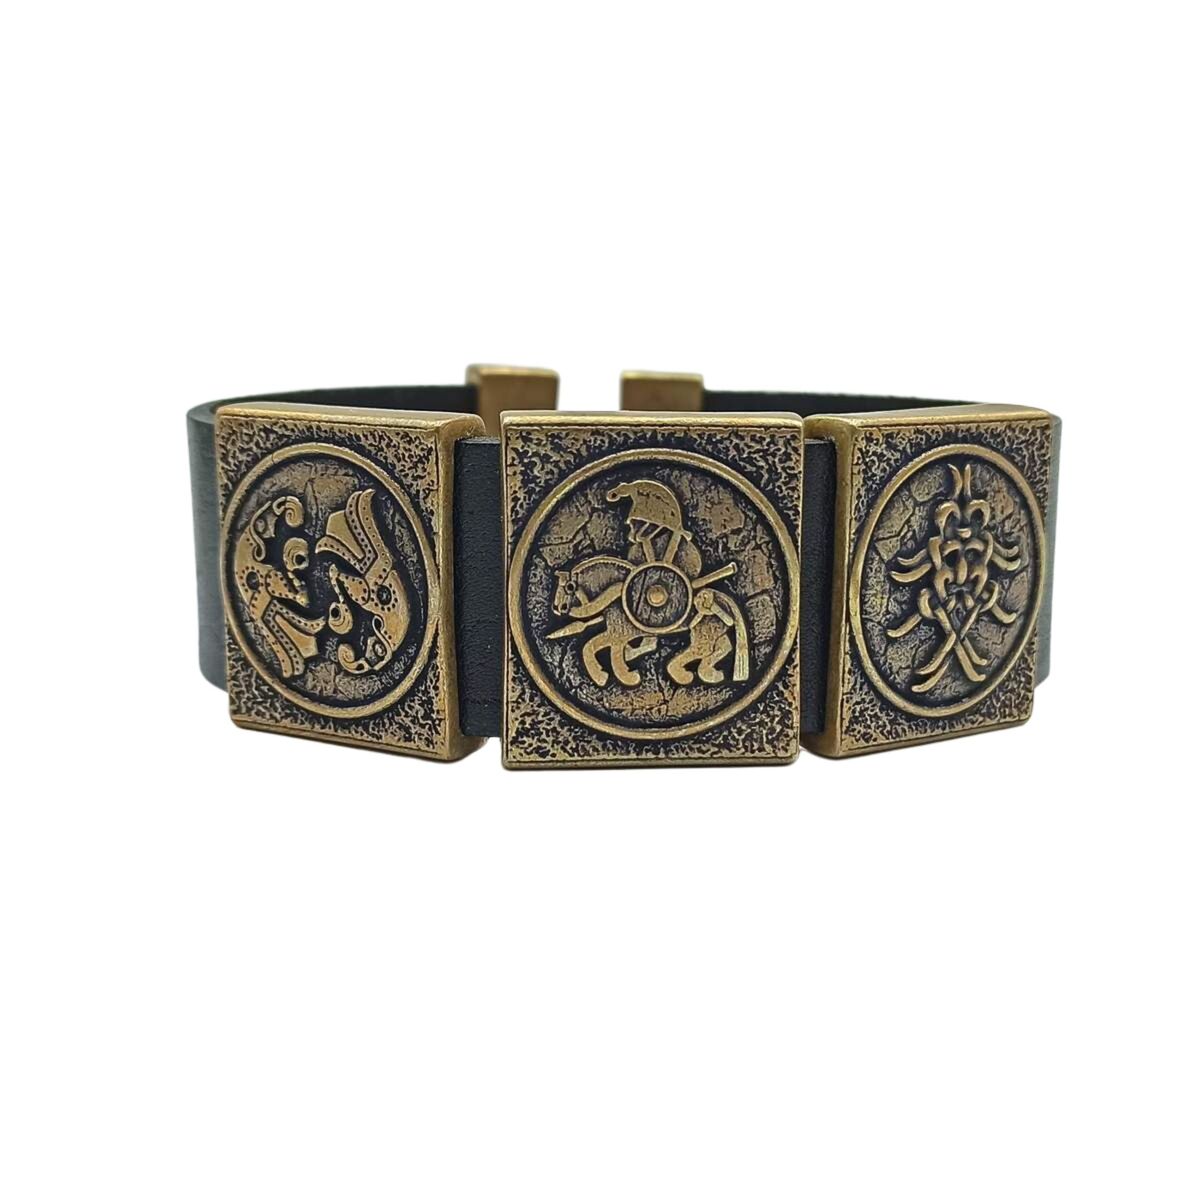 Odin leather wrist cuff bracelet 16 cm | 6.3 inch Bronze with patina 